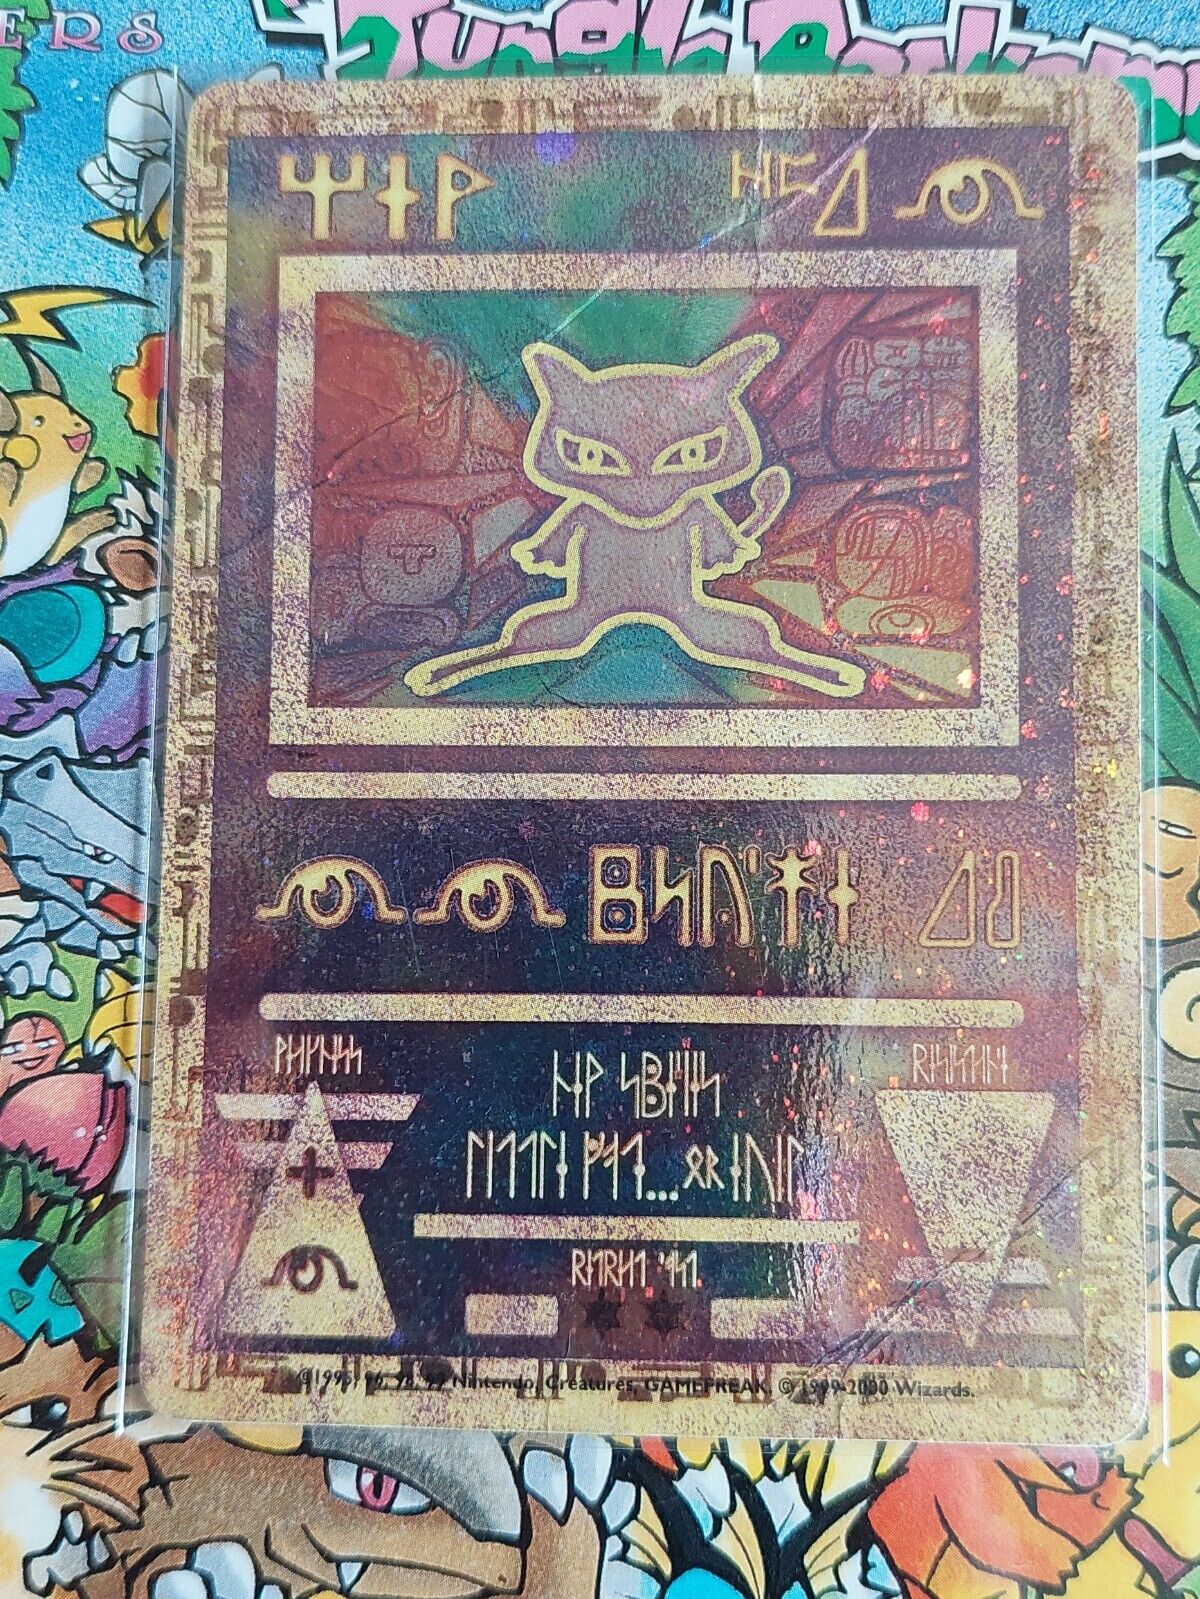 Ancient Mew Rare Holo Promo HP/DM Condition WOTC/WB vintage Pokemon tcg Card